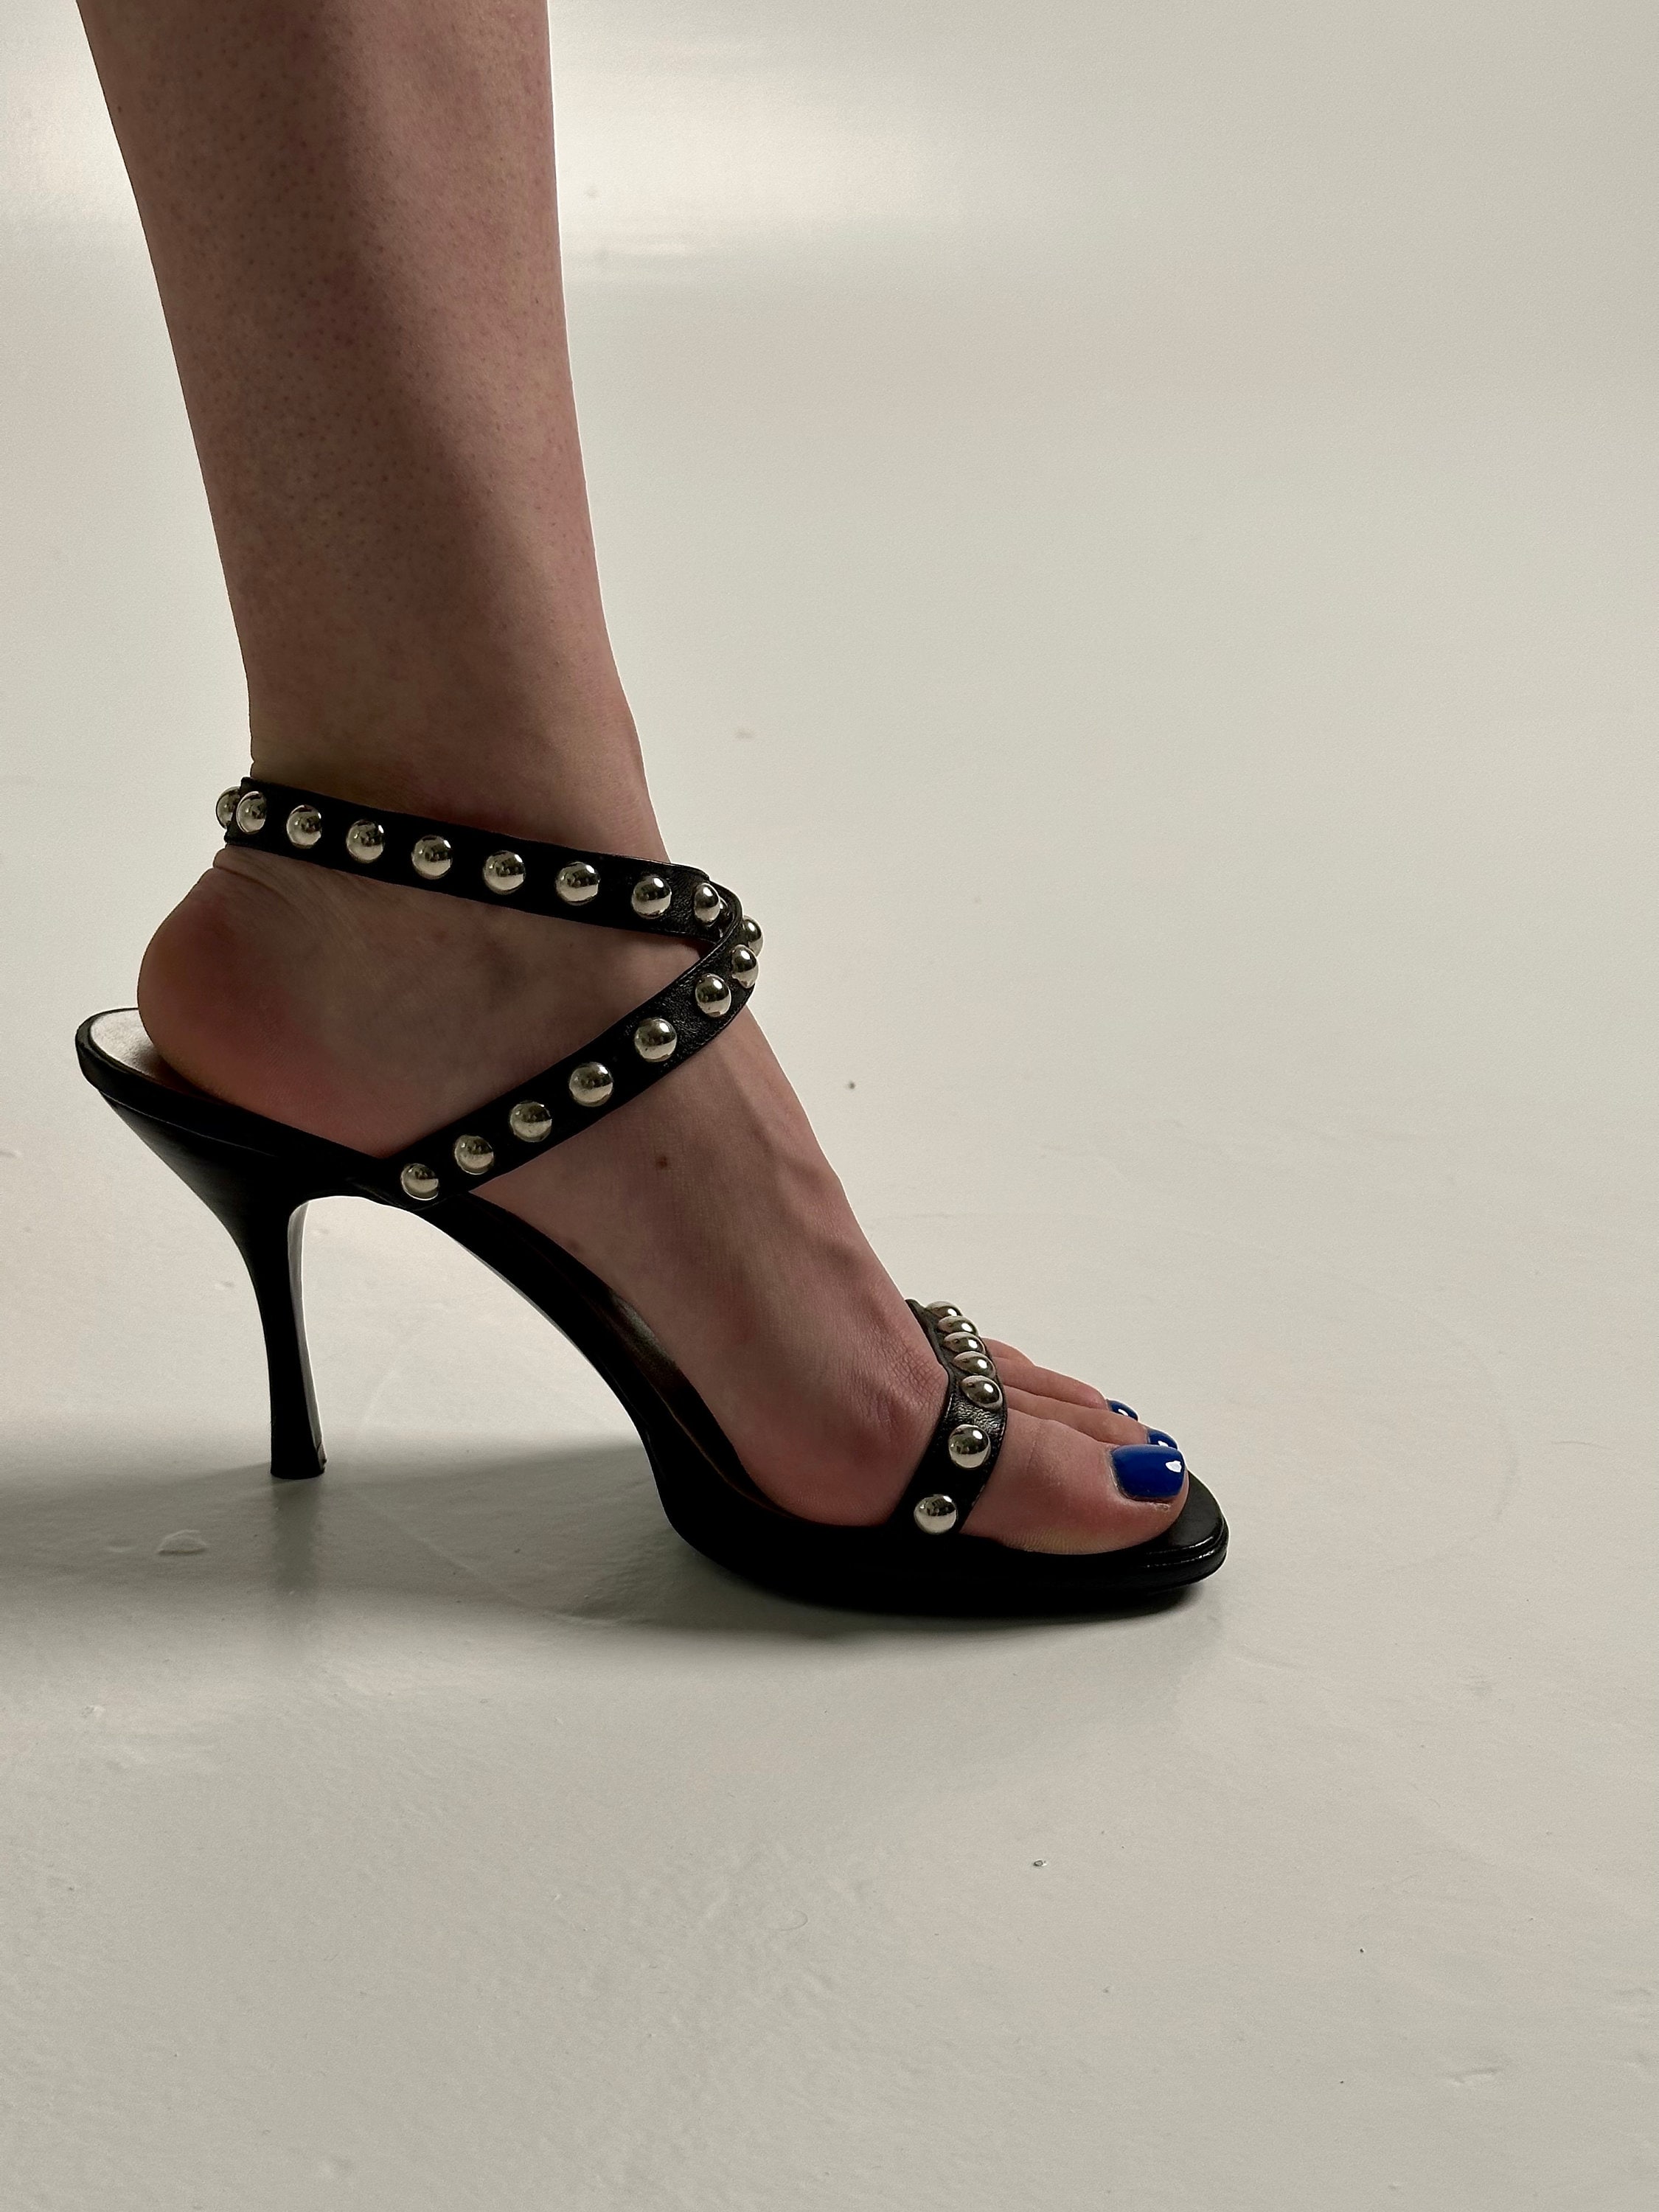 Women's Louis Vuitton Strappy Sandals Heels Shoes Size 35.5 EU/5.5 US  Gunmetal